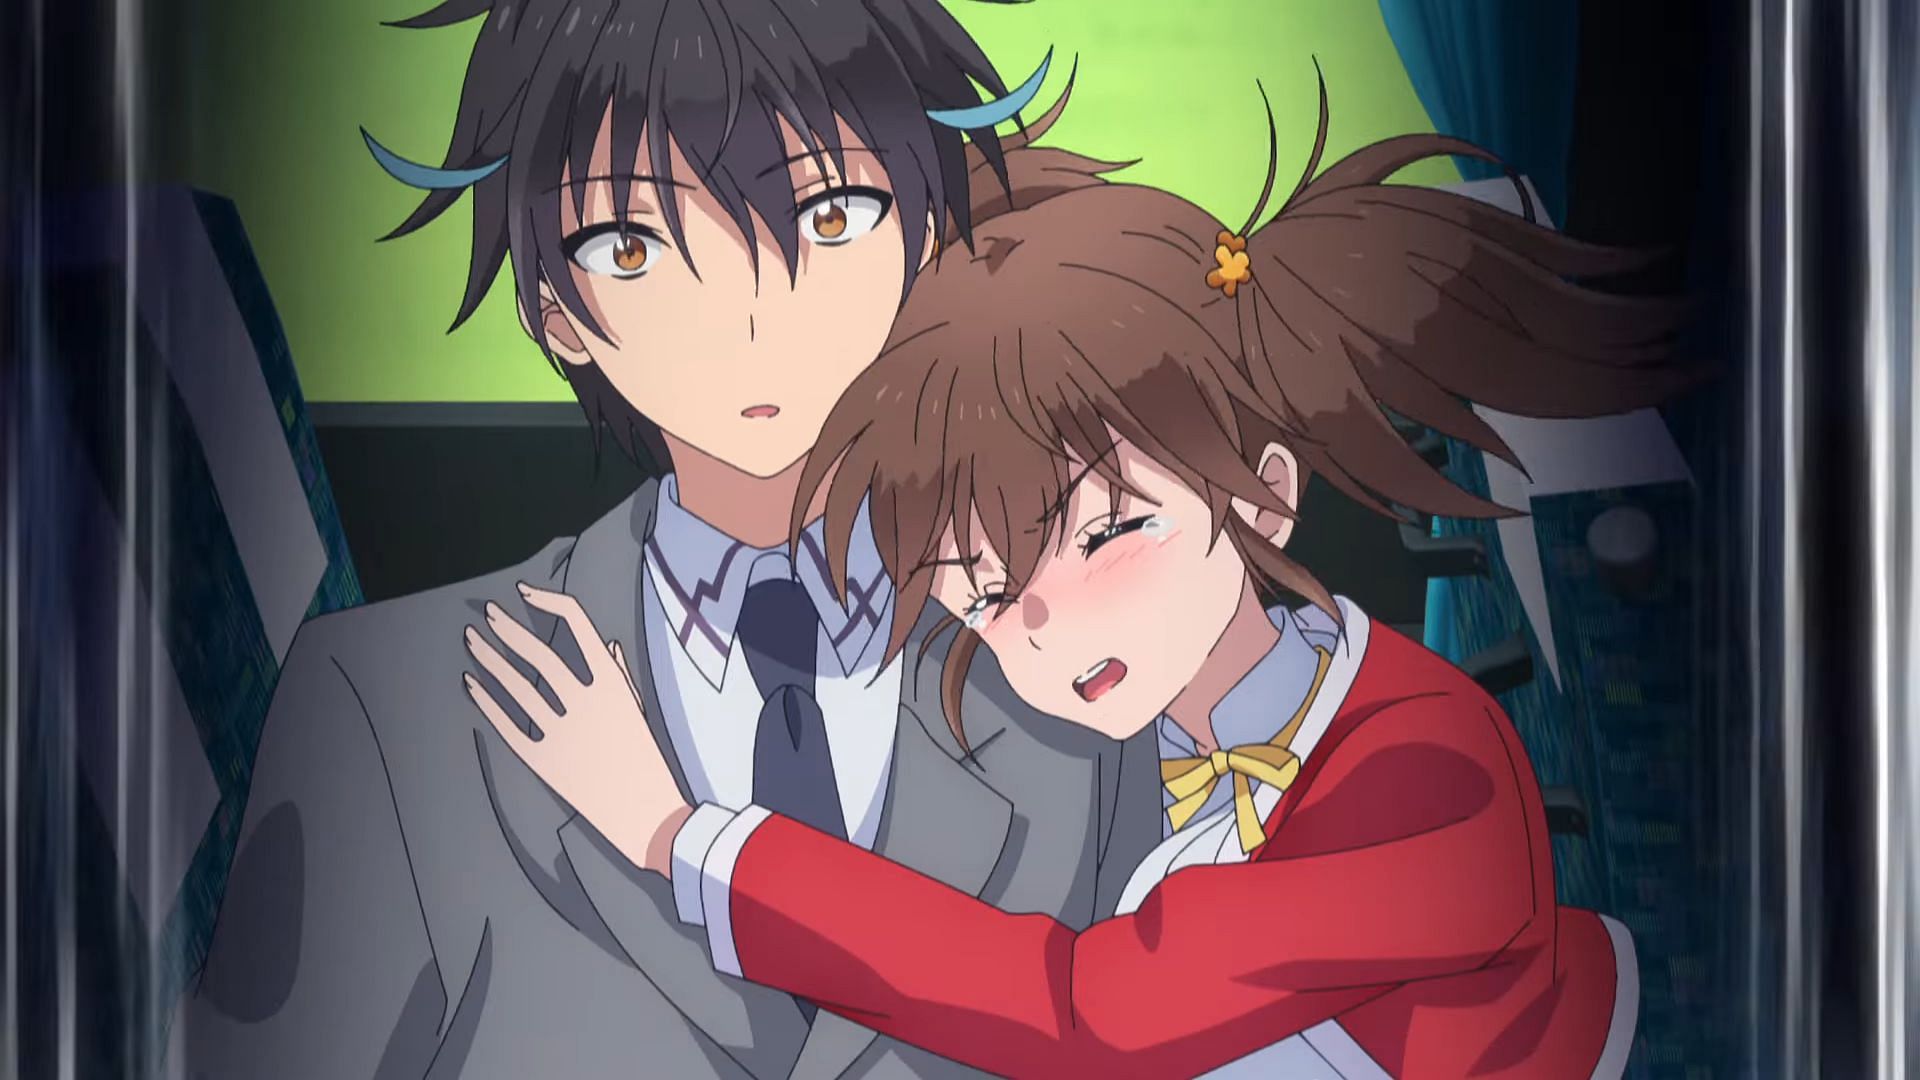 Yogiri and Tomochika as seen in My Instant Death Ability anime (image via Okuruto Noboru)